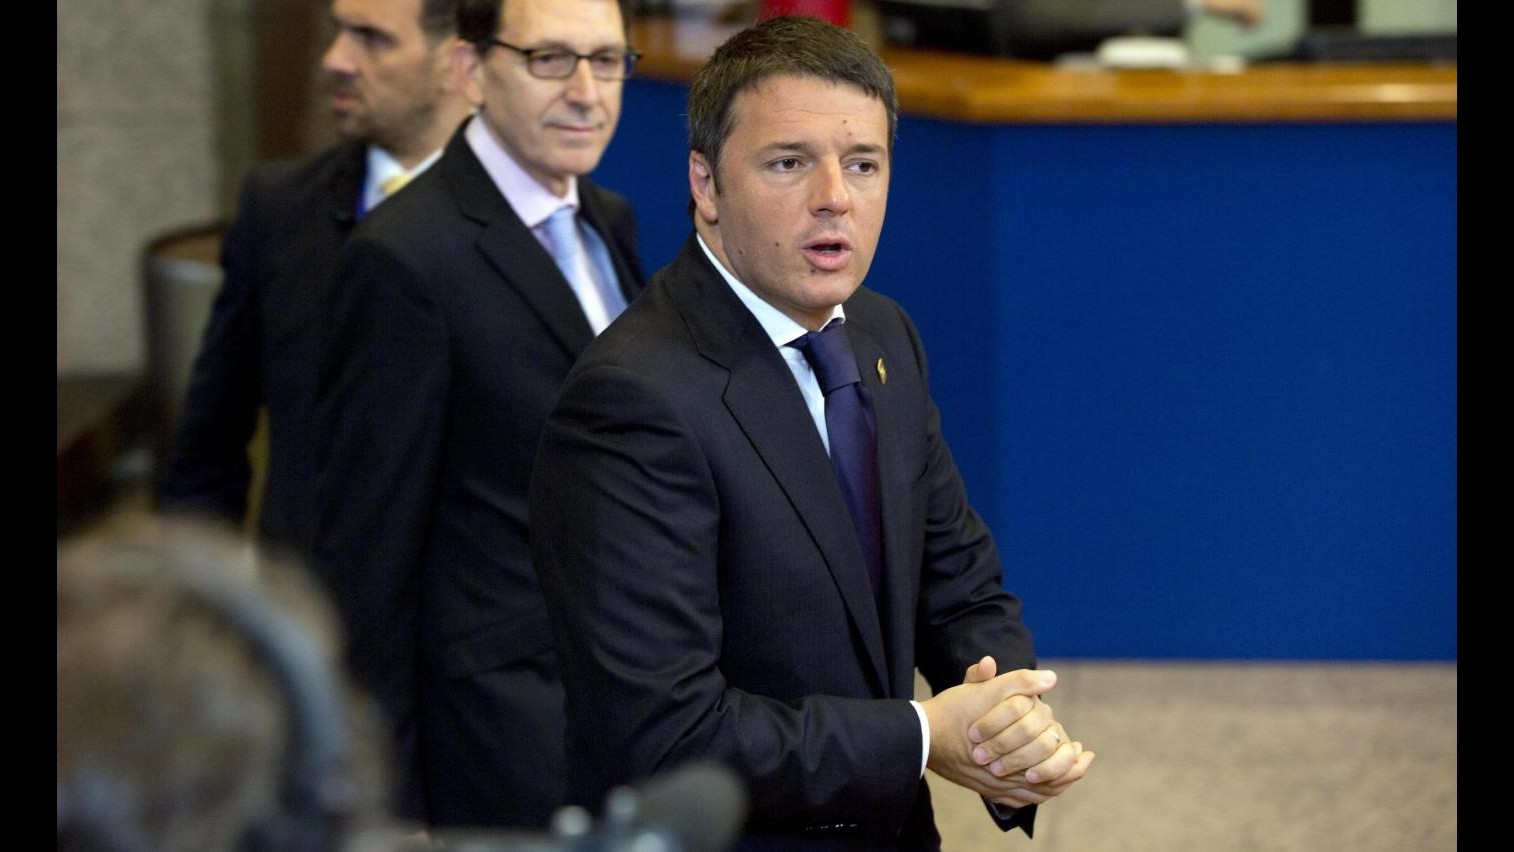 Mose, l’amarezza di Matteo Renzi: A casa i ladri. E’ una ferita profonda